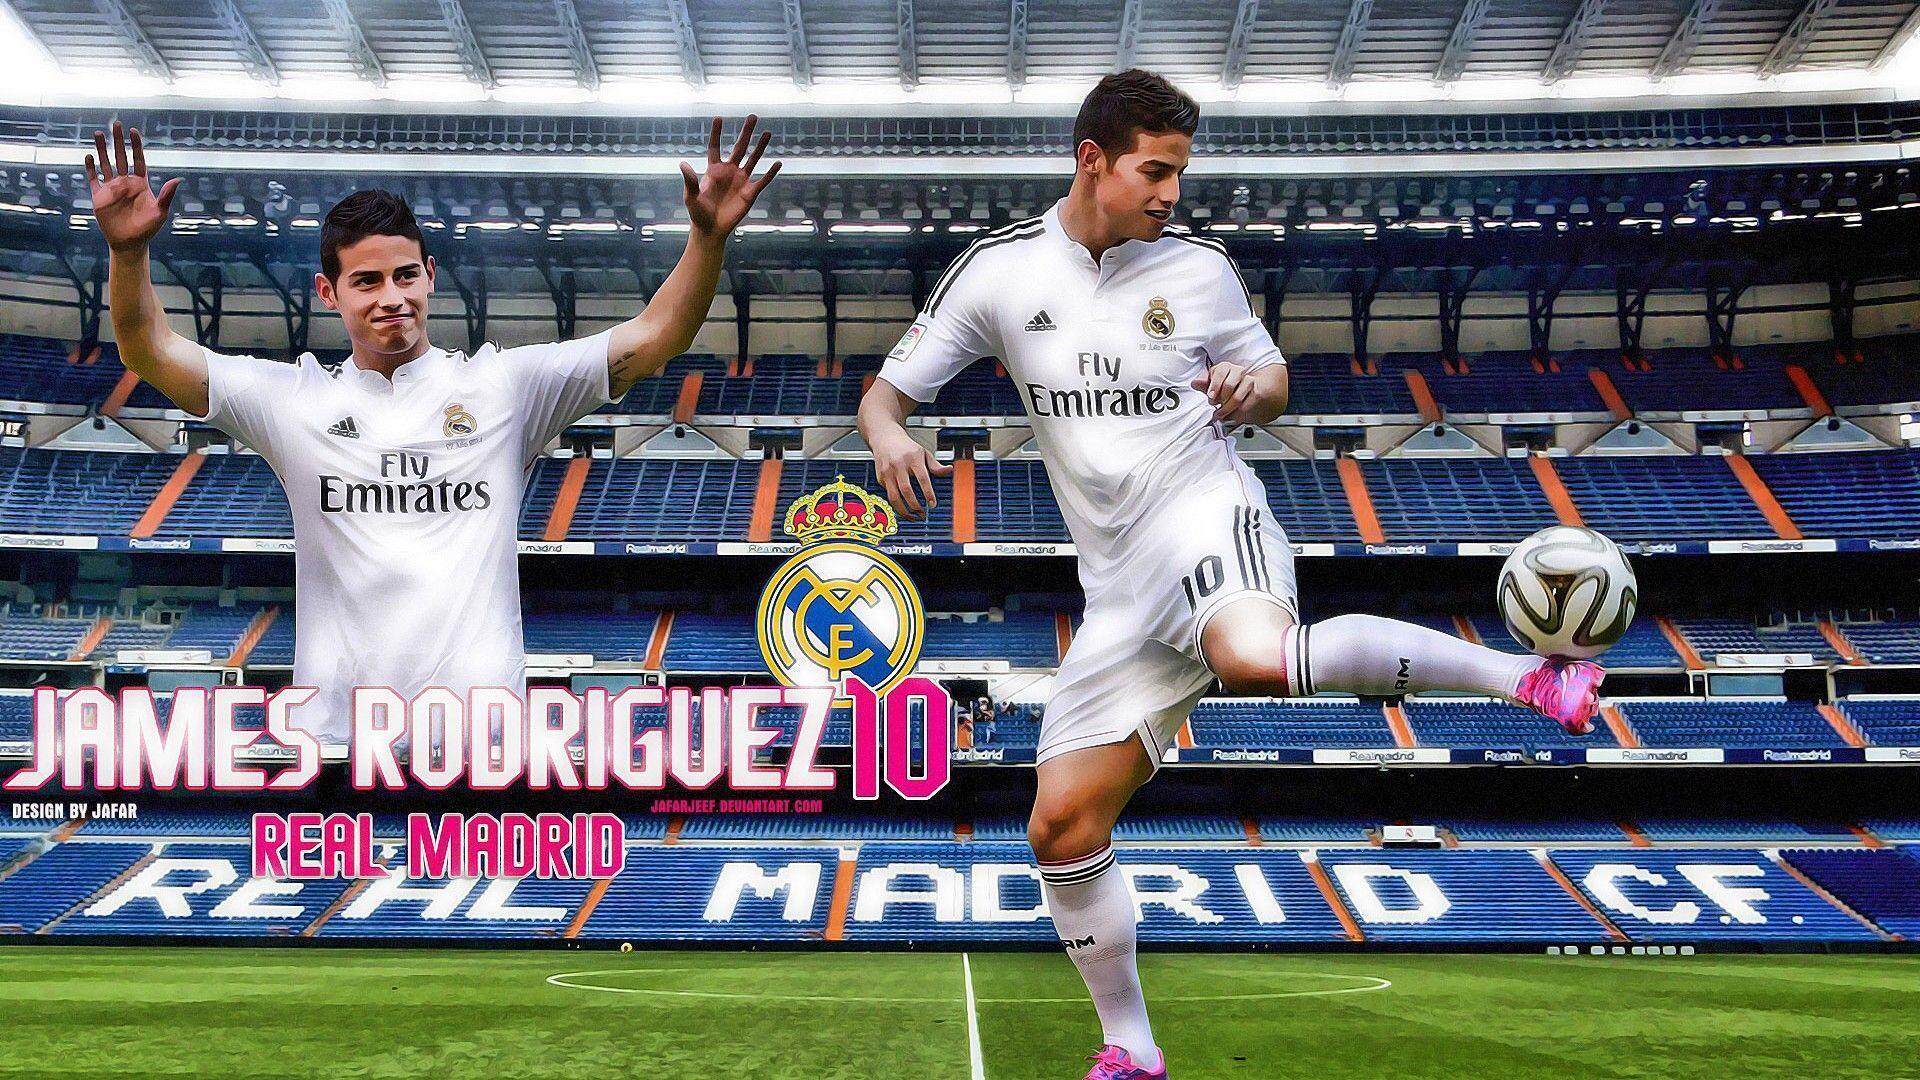 James Rodriguez 2014 Real Madrid Wallpaper James Rodriguez 2014